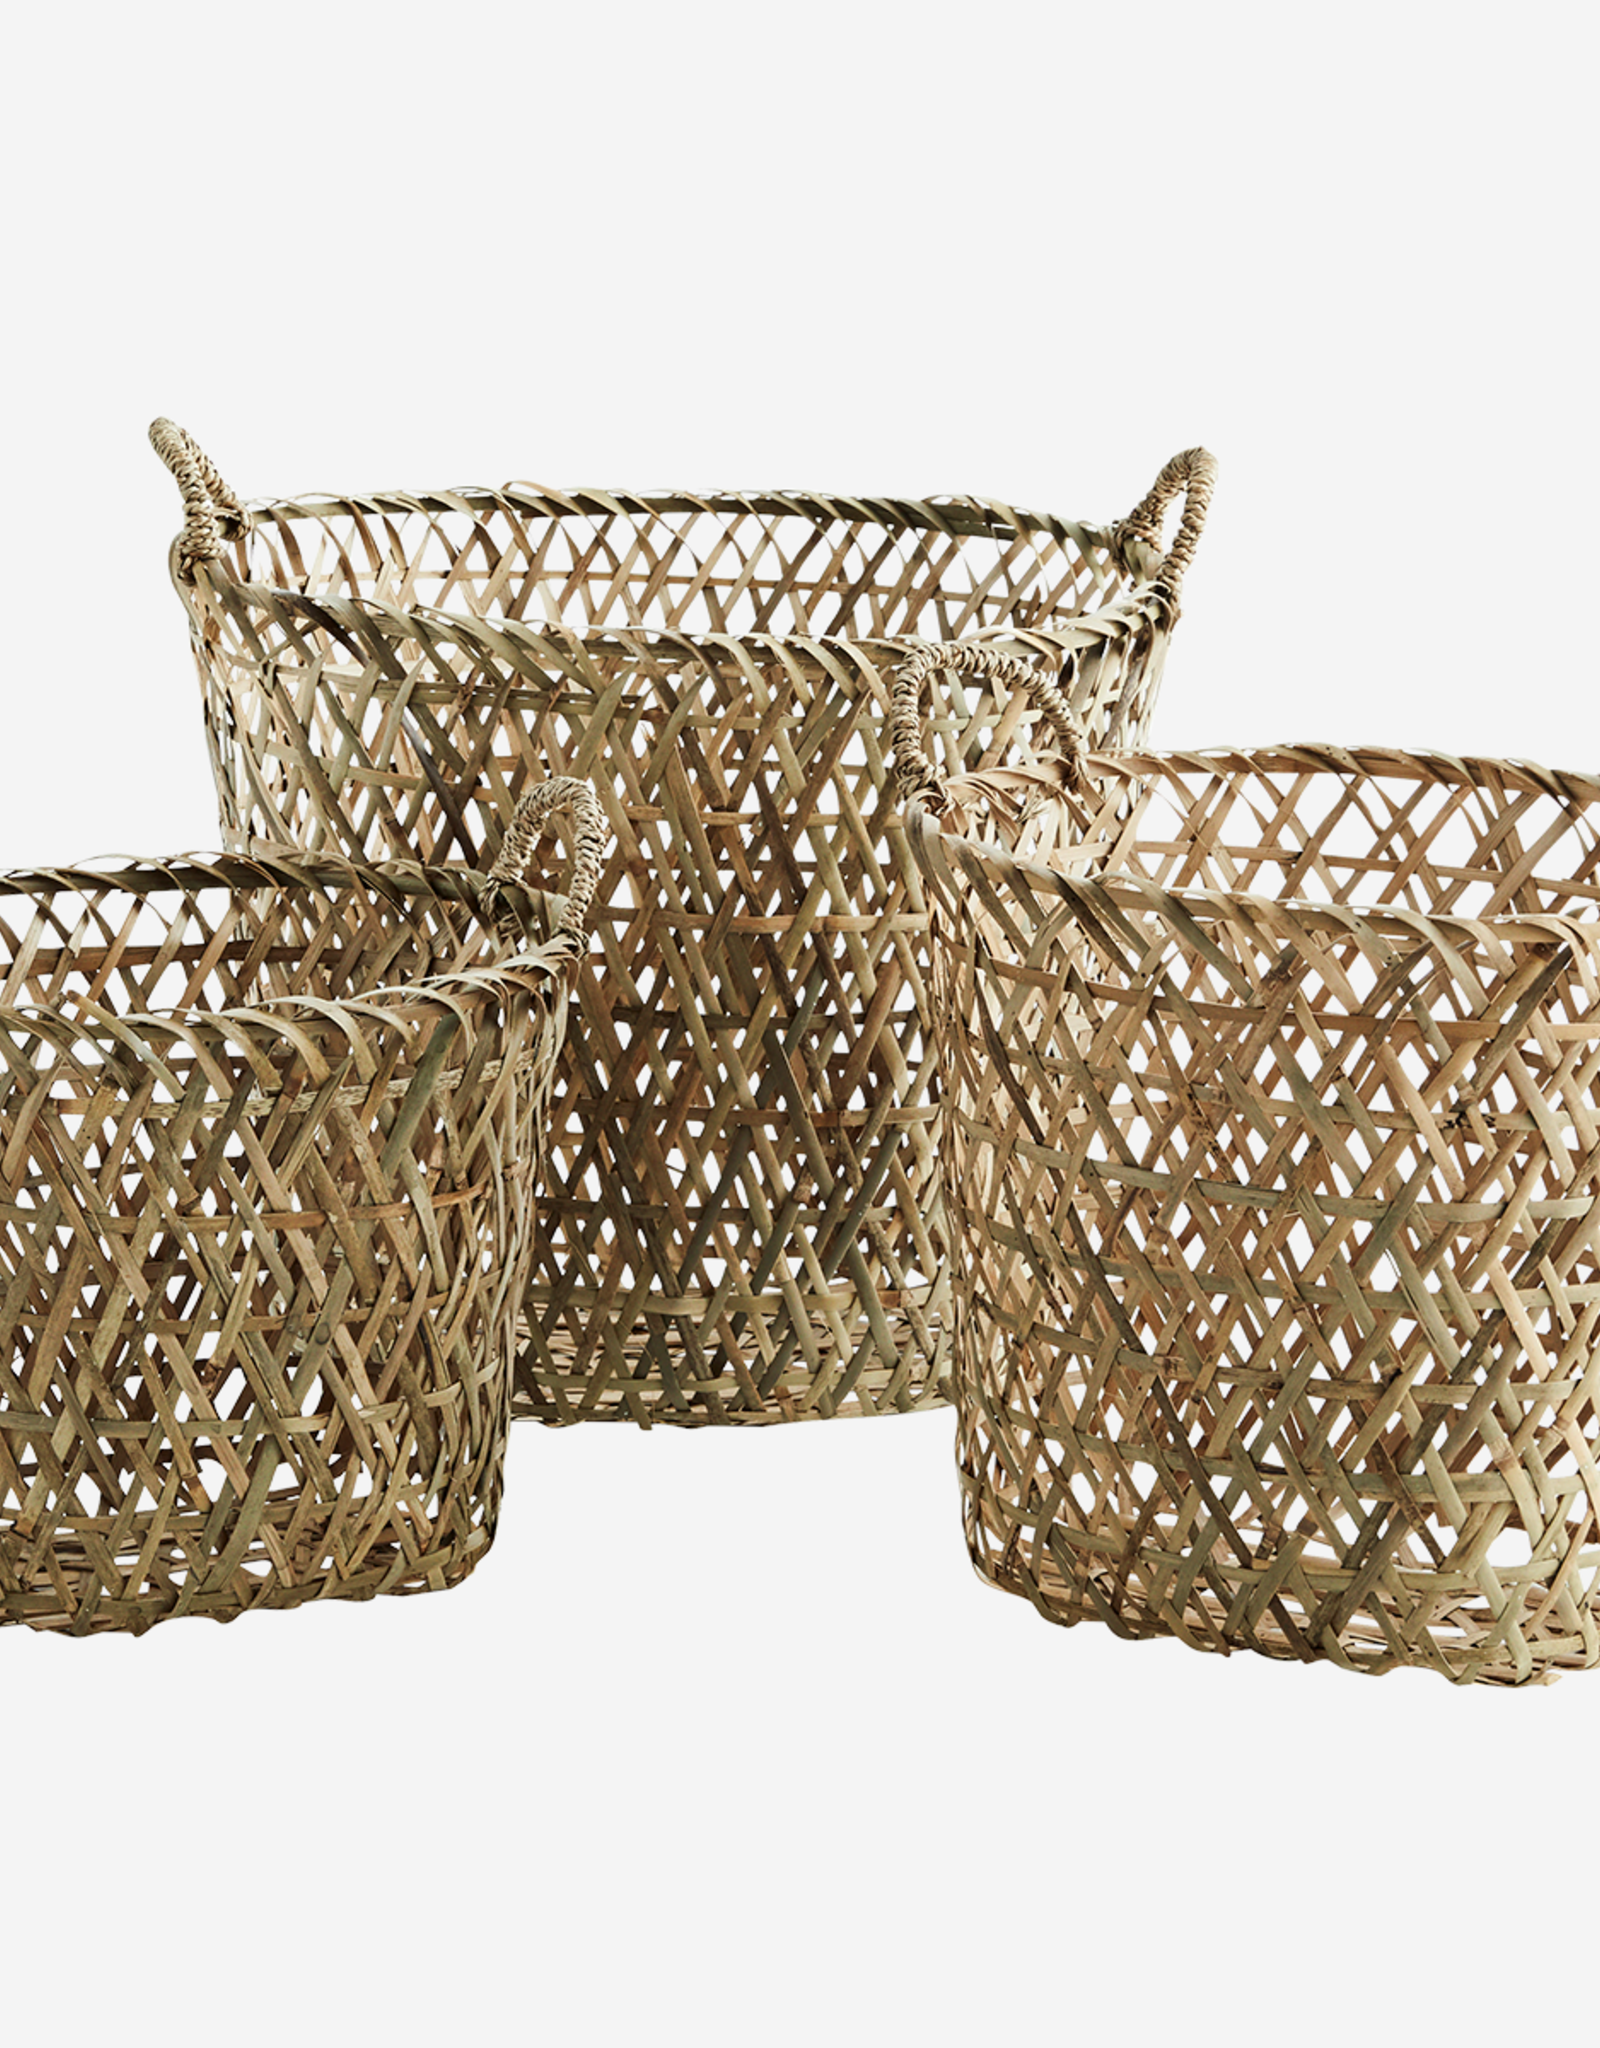 Madam Stoltz Madam Stoltz - Oval bamboo baskets w/handle natural - M